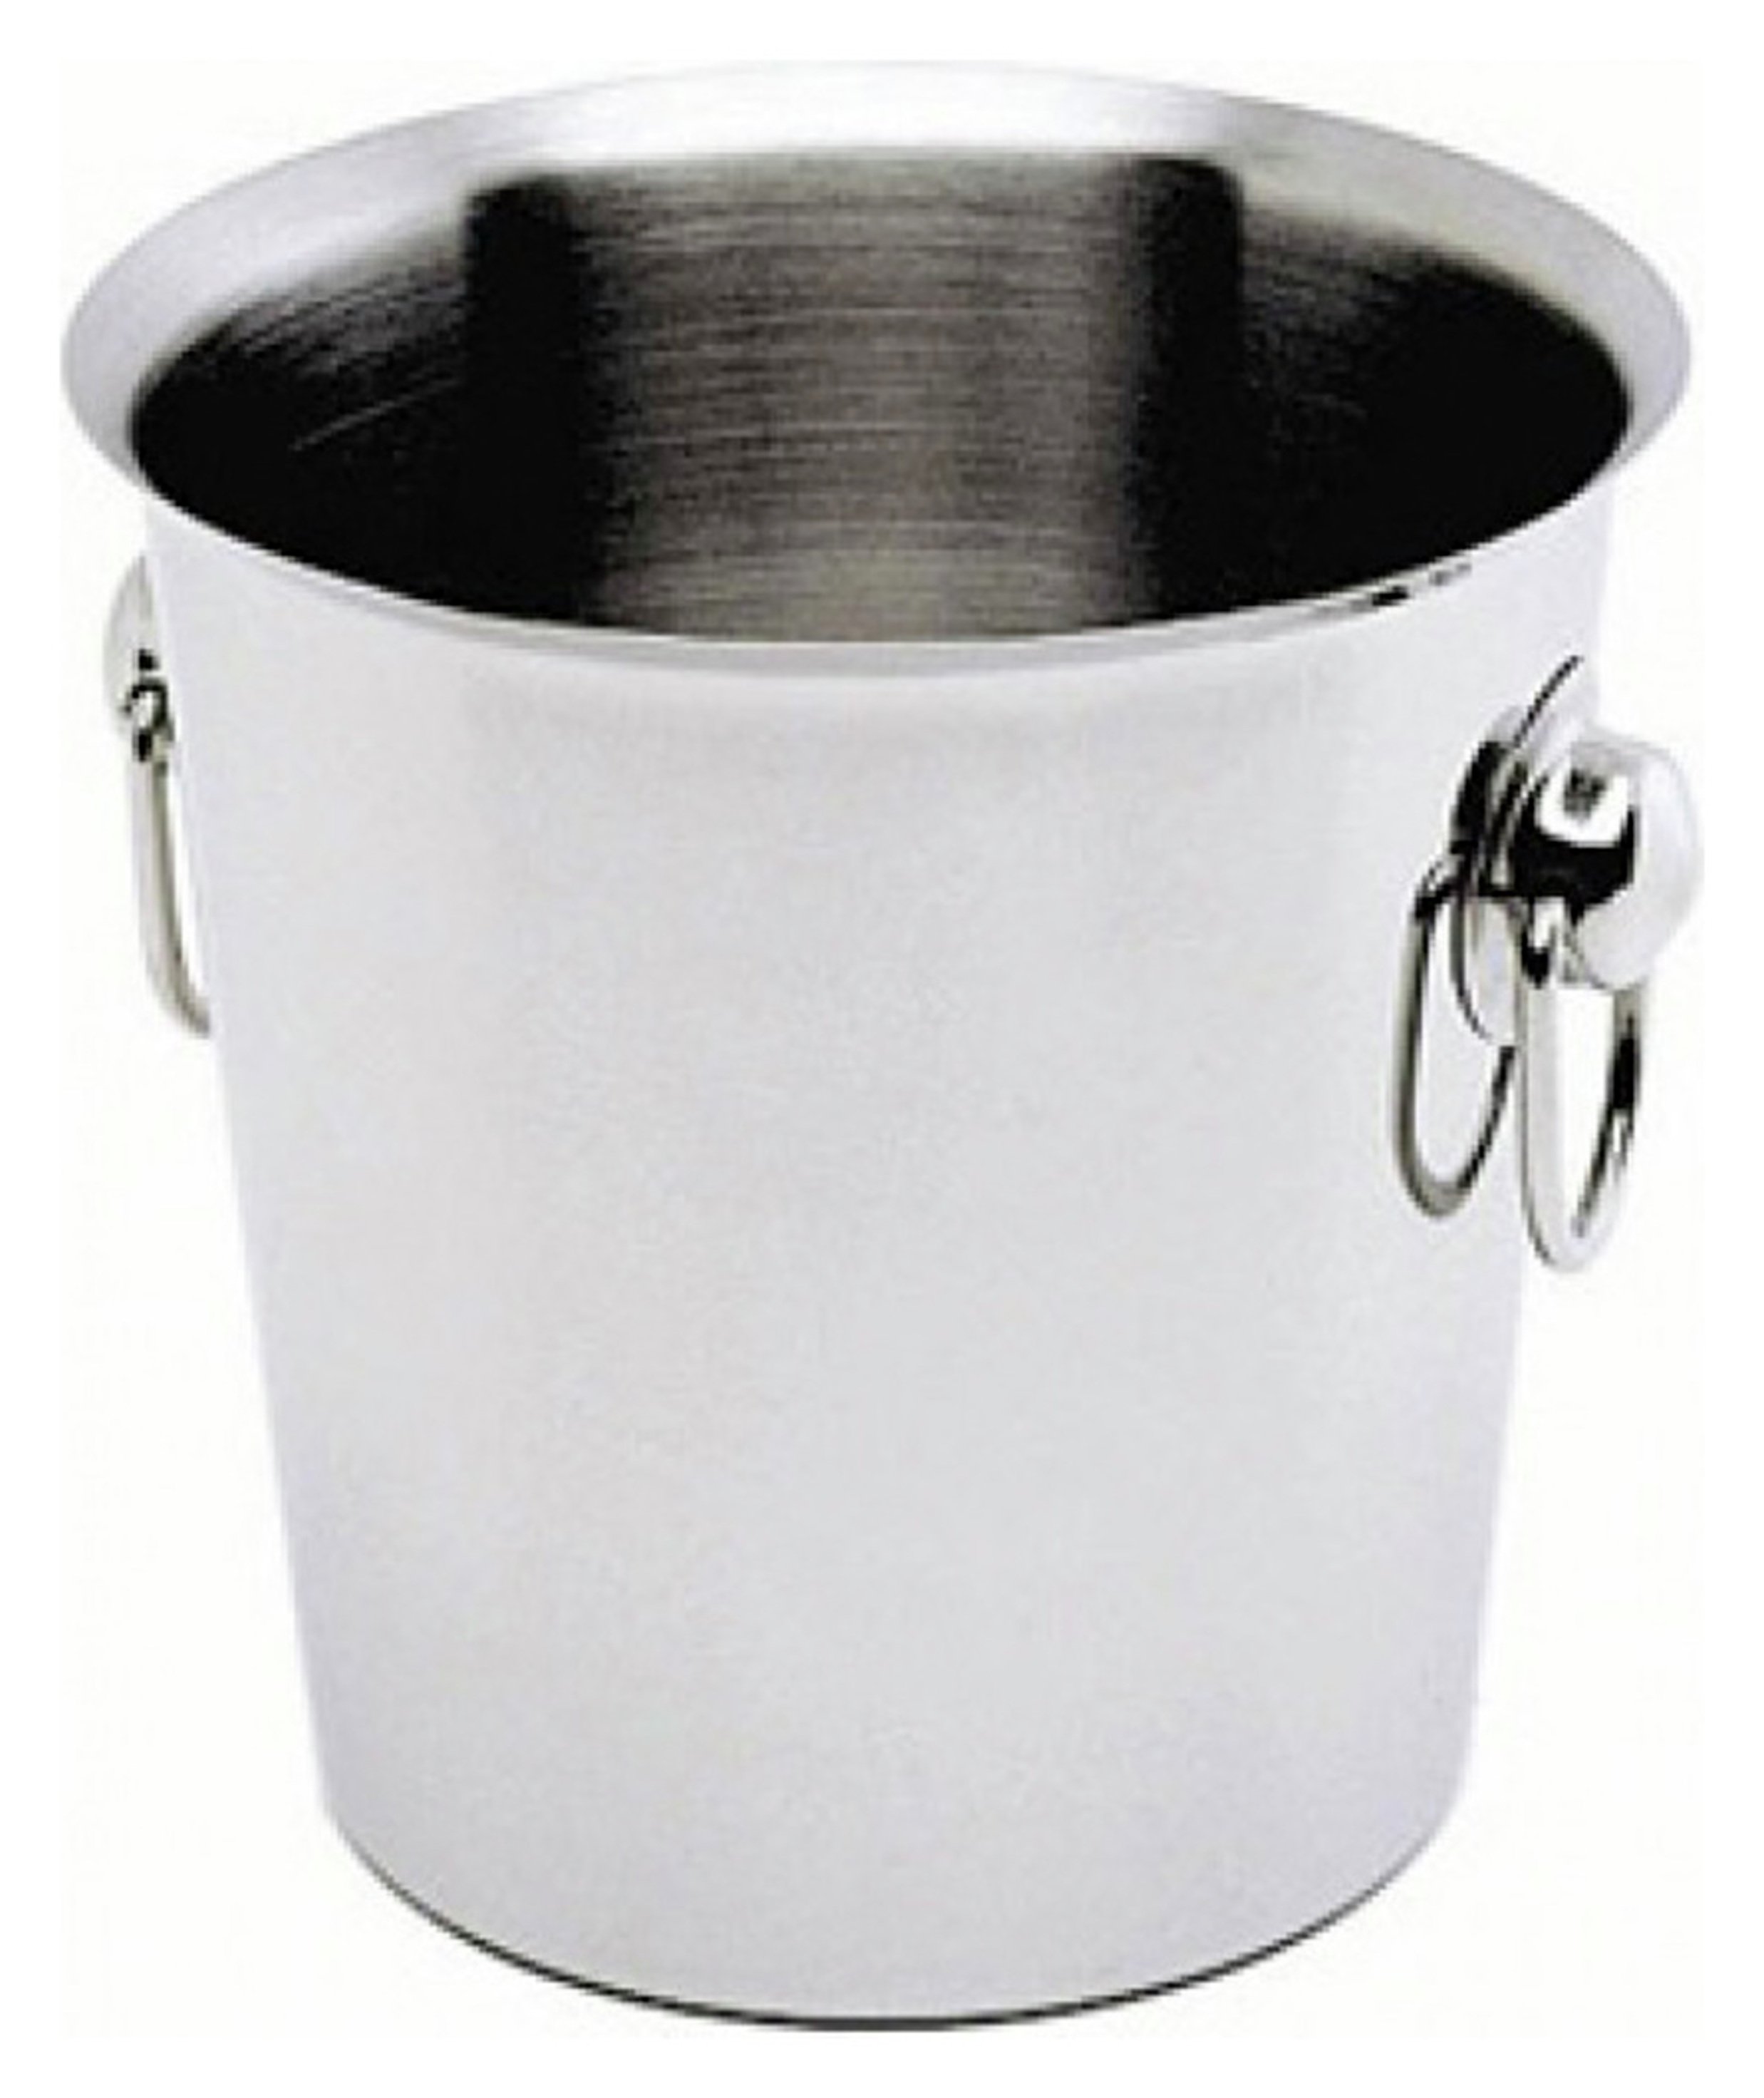 Zodiac Wine Bucket 18cm - Stainless Steel